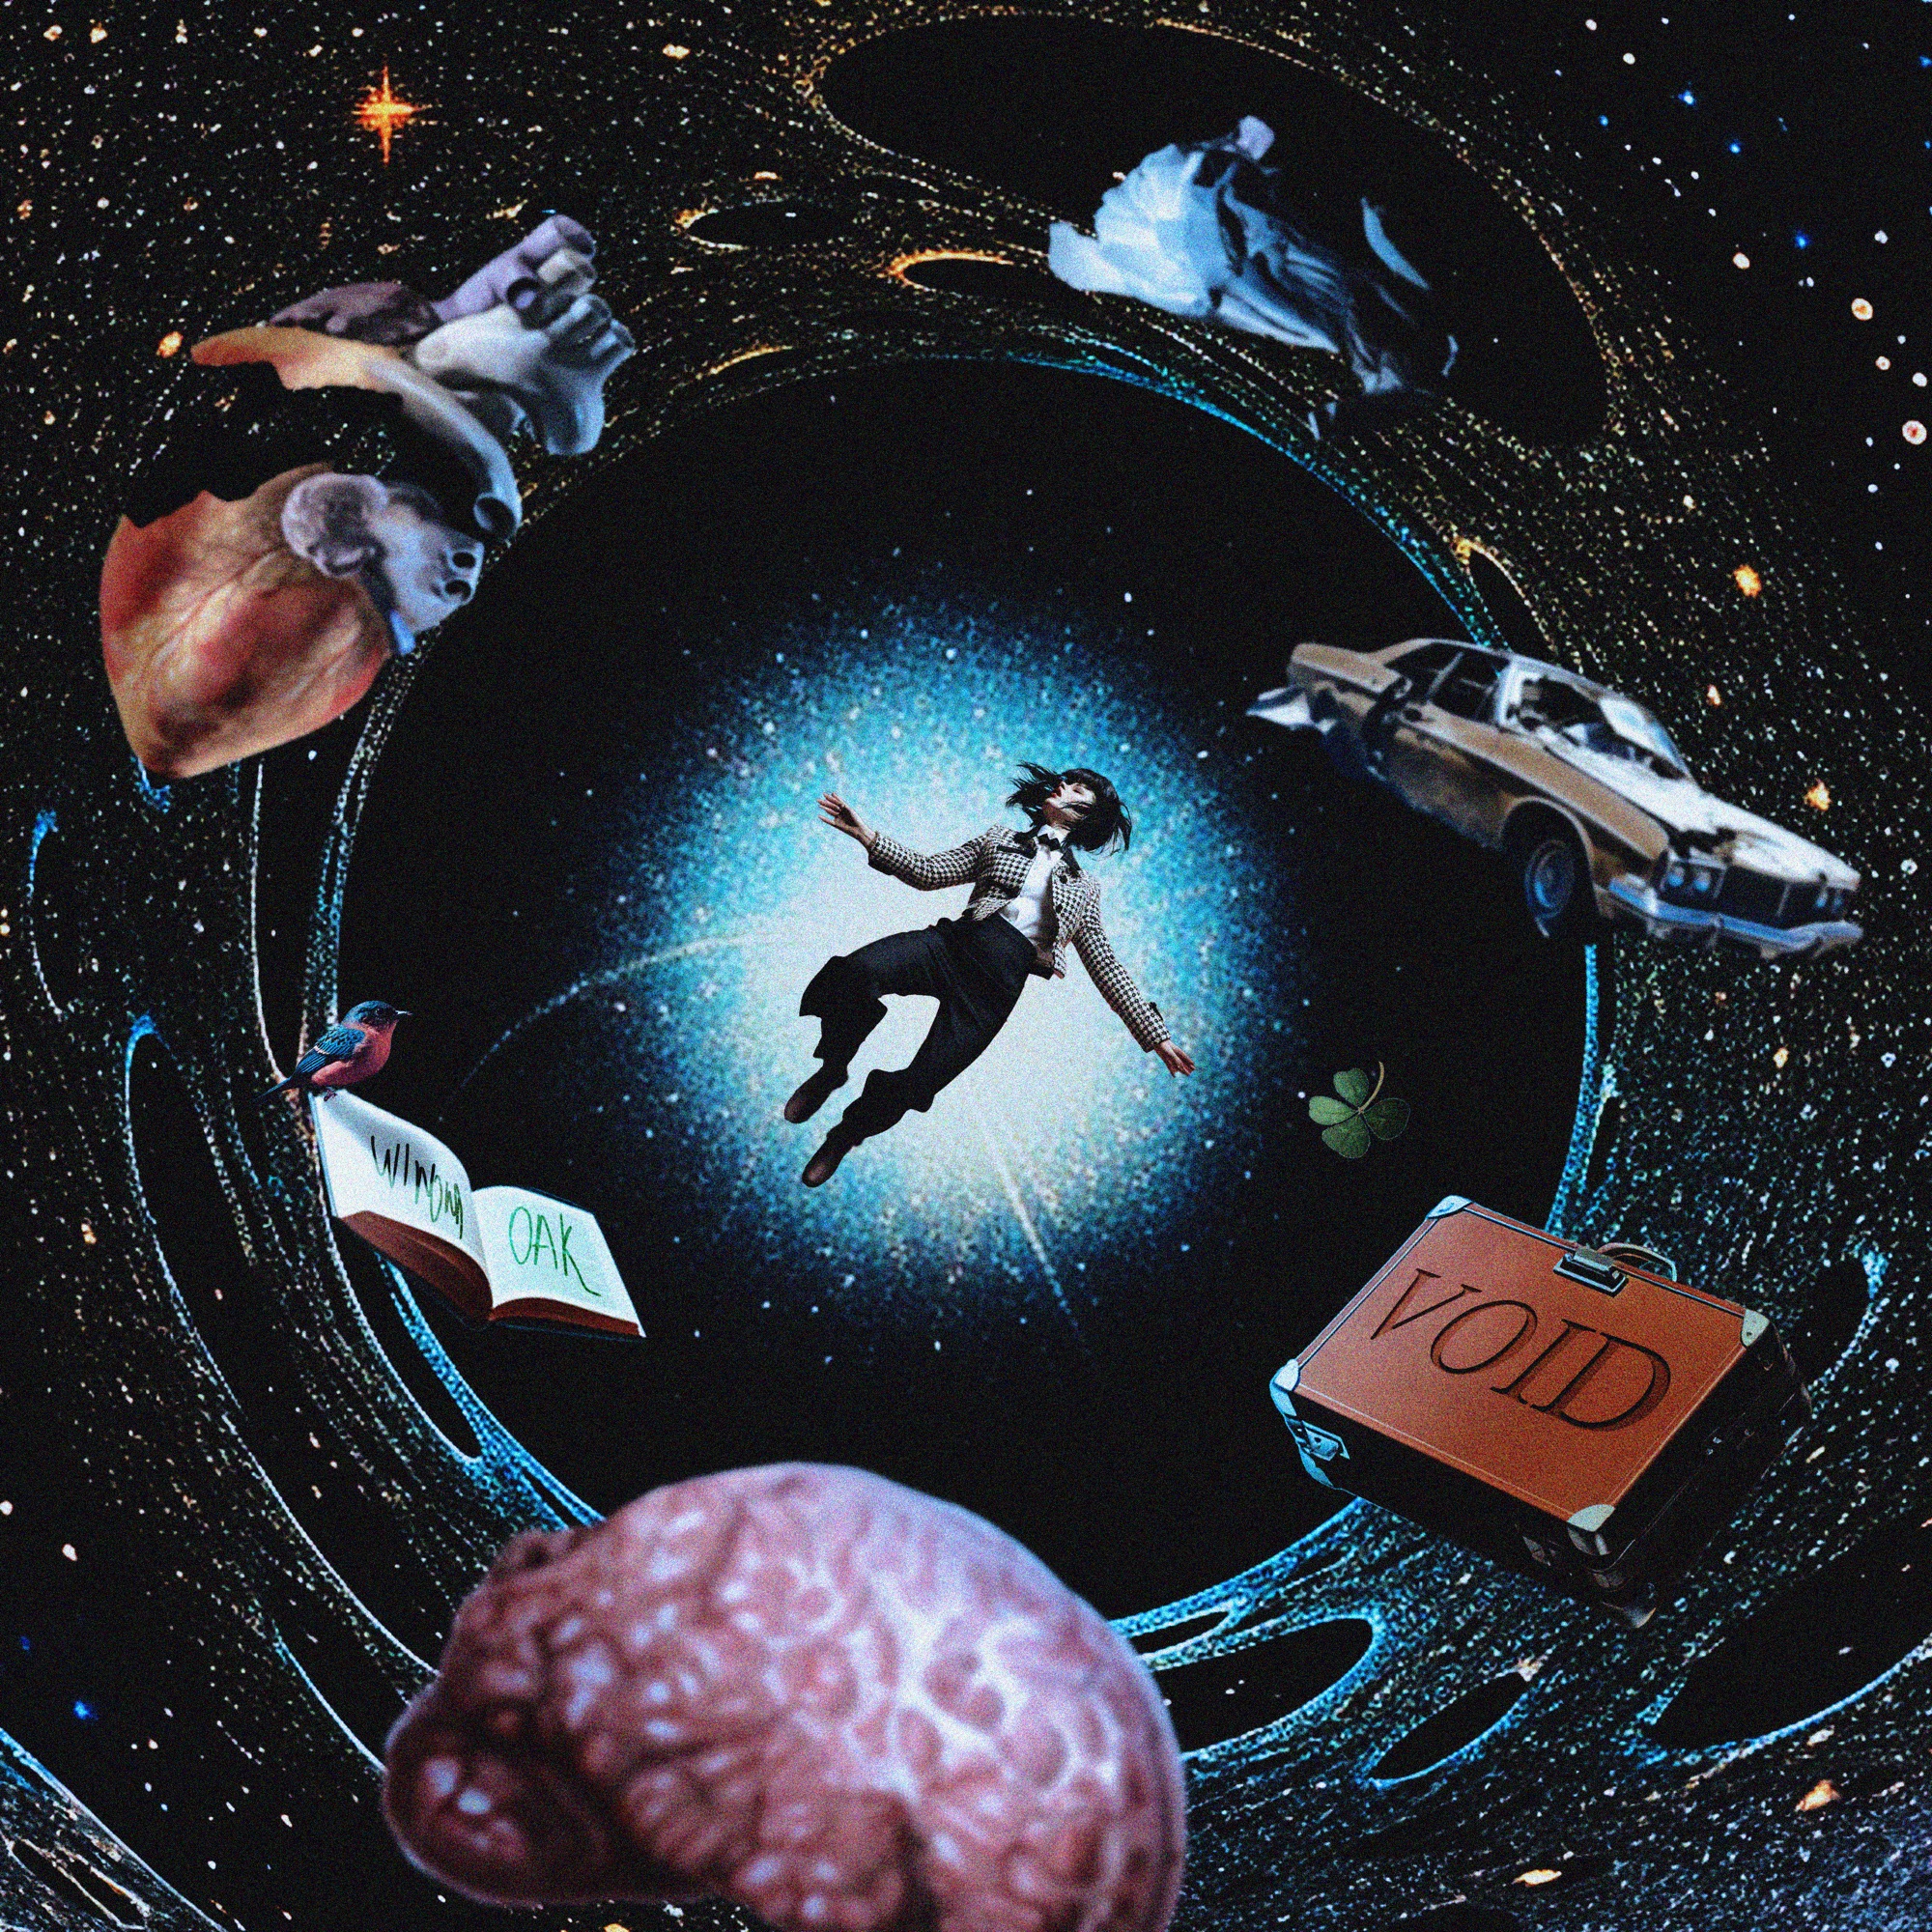 Winona Oak & Boy In Space Inside Out cover artwork